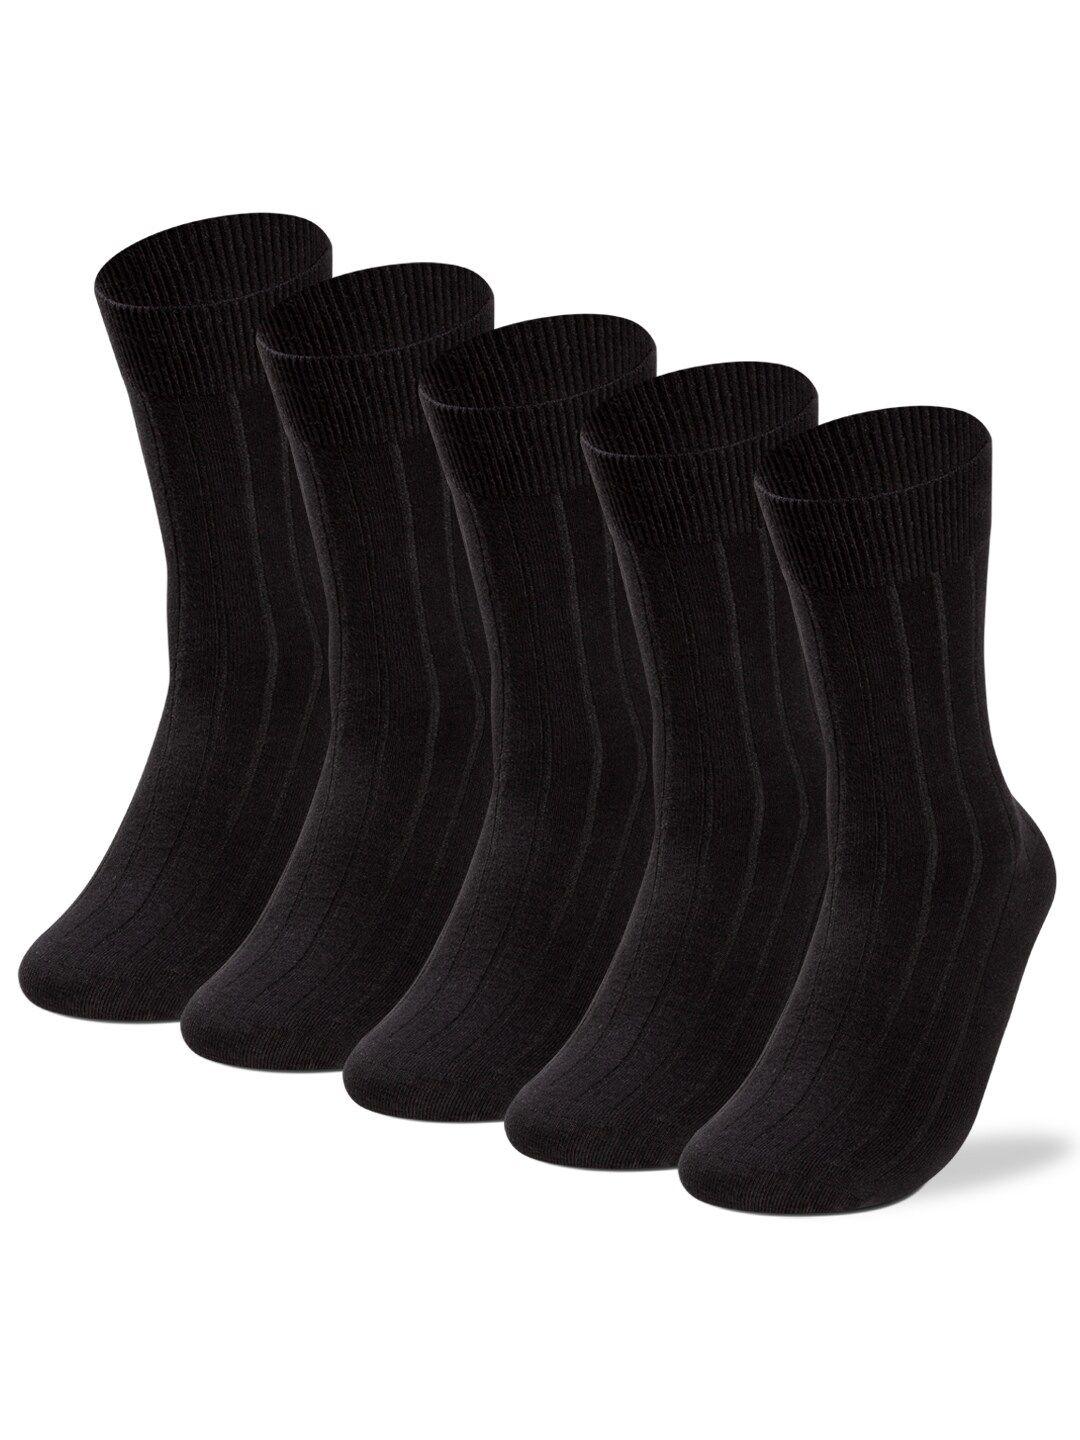 supersox men pack of 5 patterned cotton calf-length socks